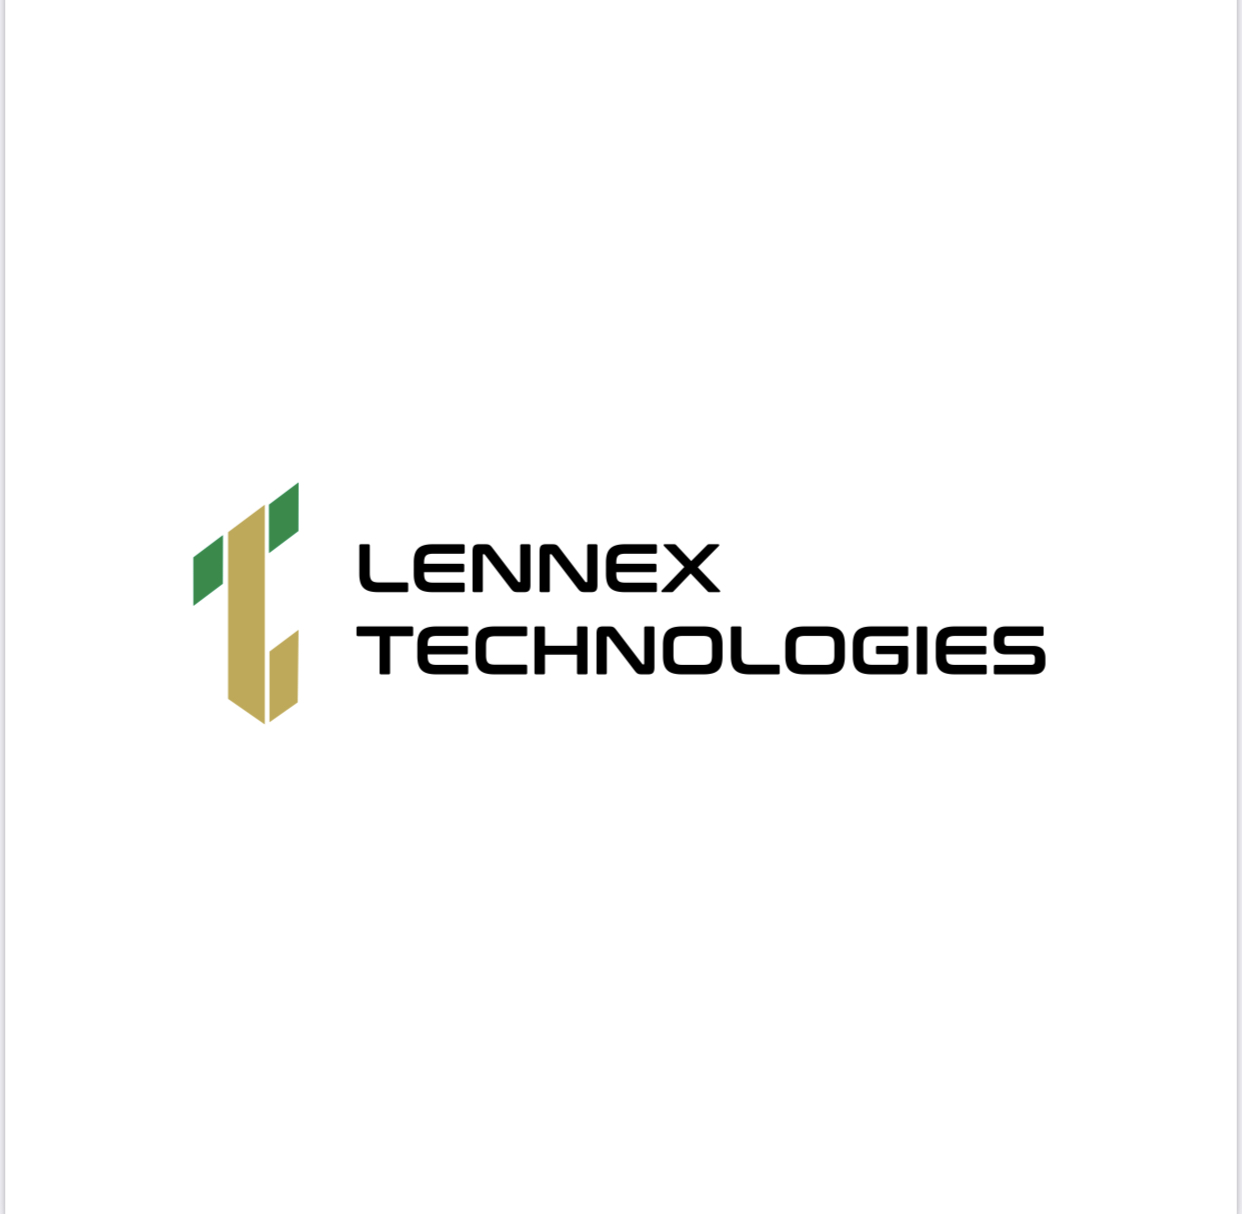 Lennex Technologies